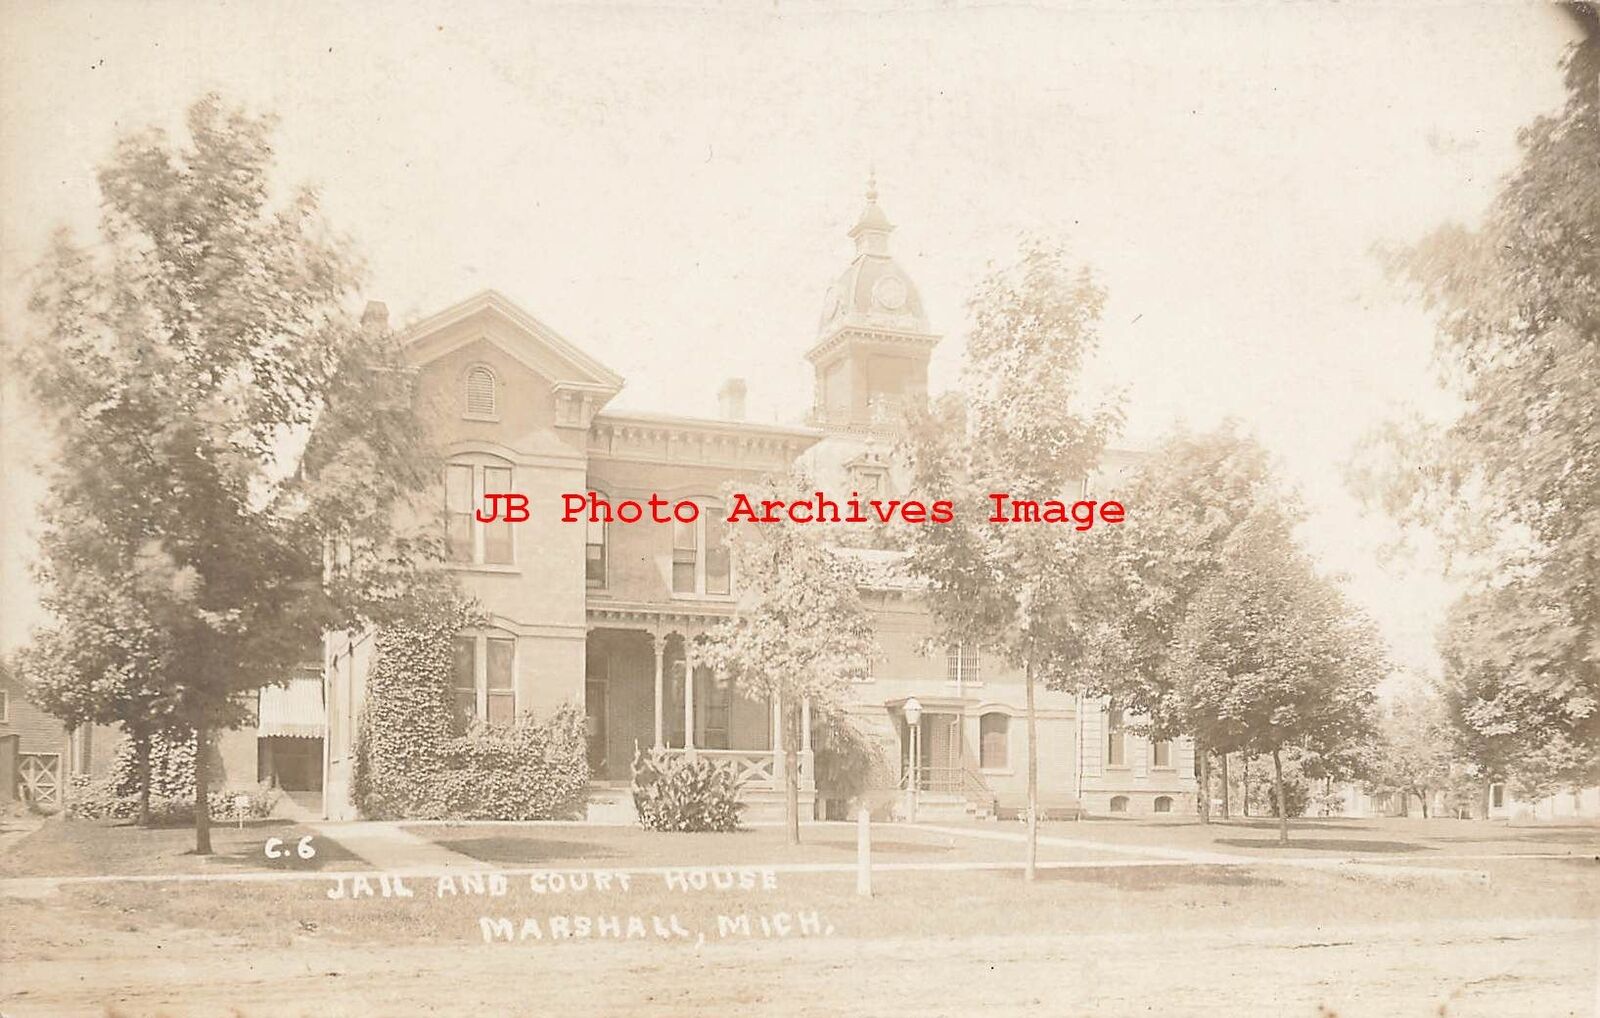 MI, Marshall, Michigan, RPPC, Jail & Court House Building, Photo No C6